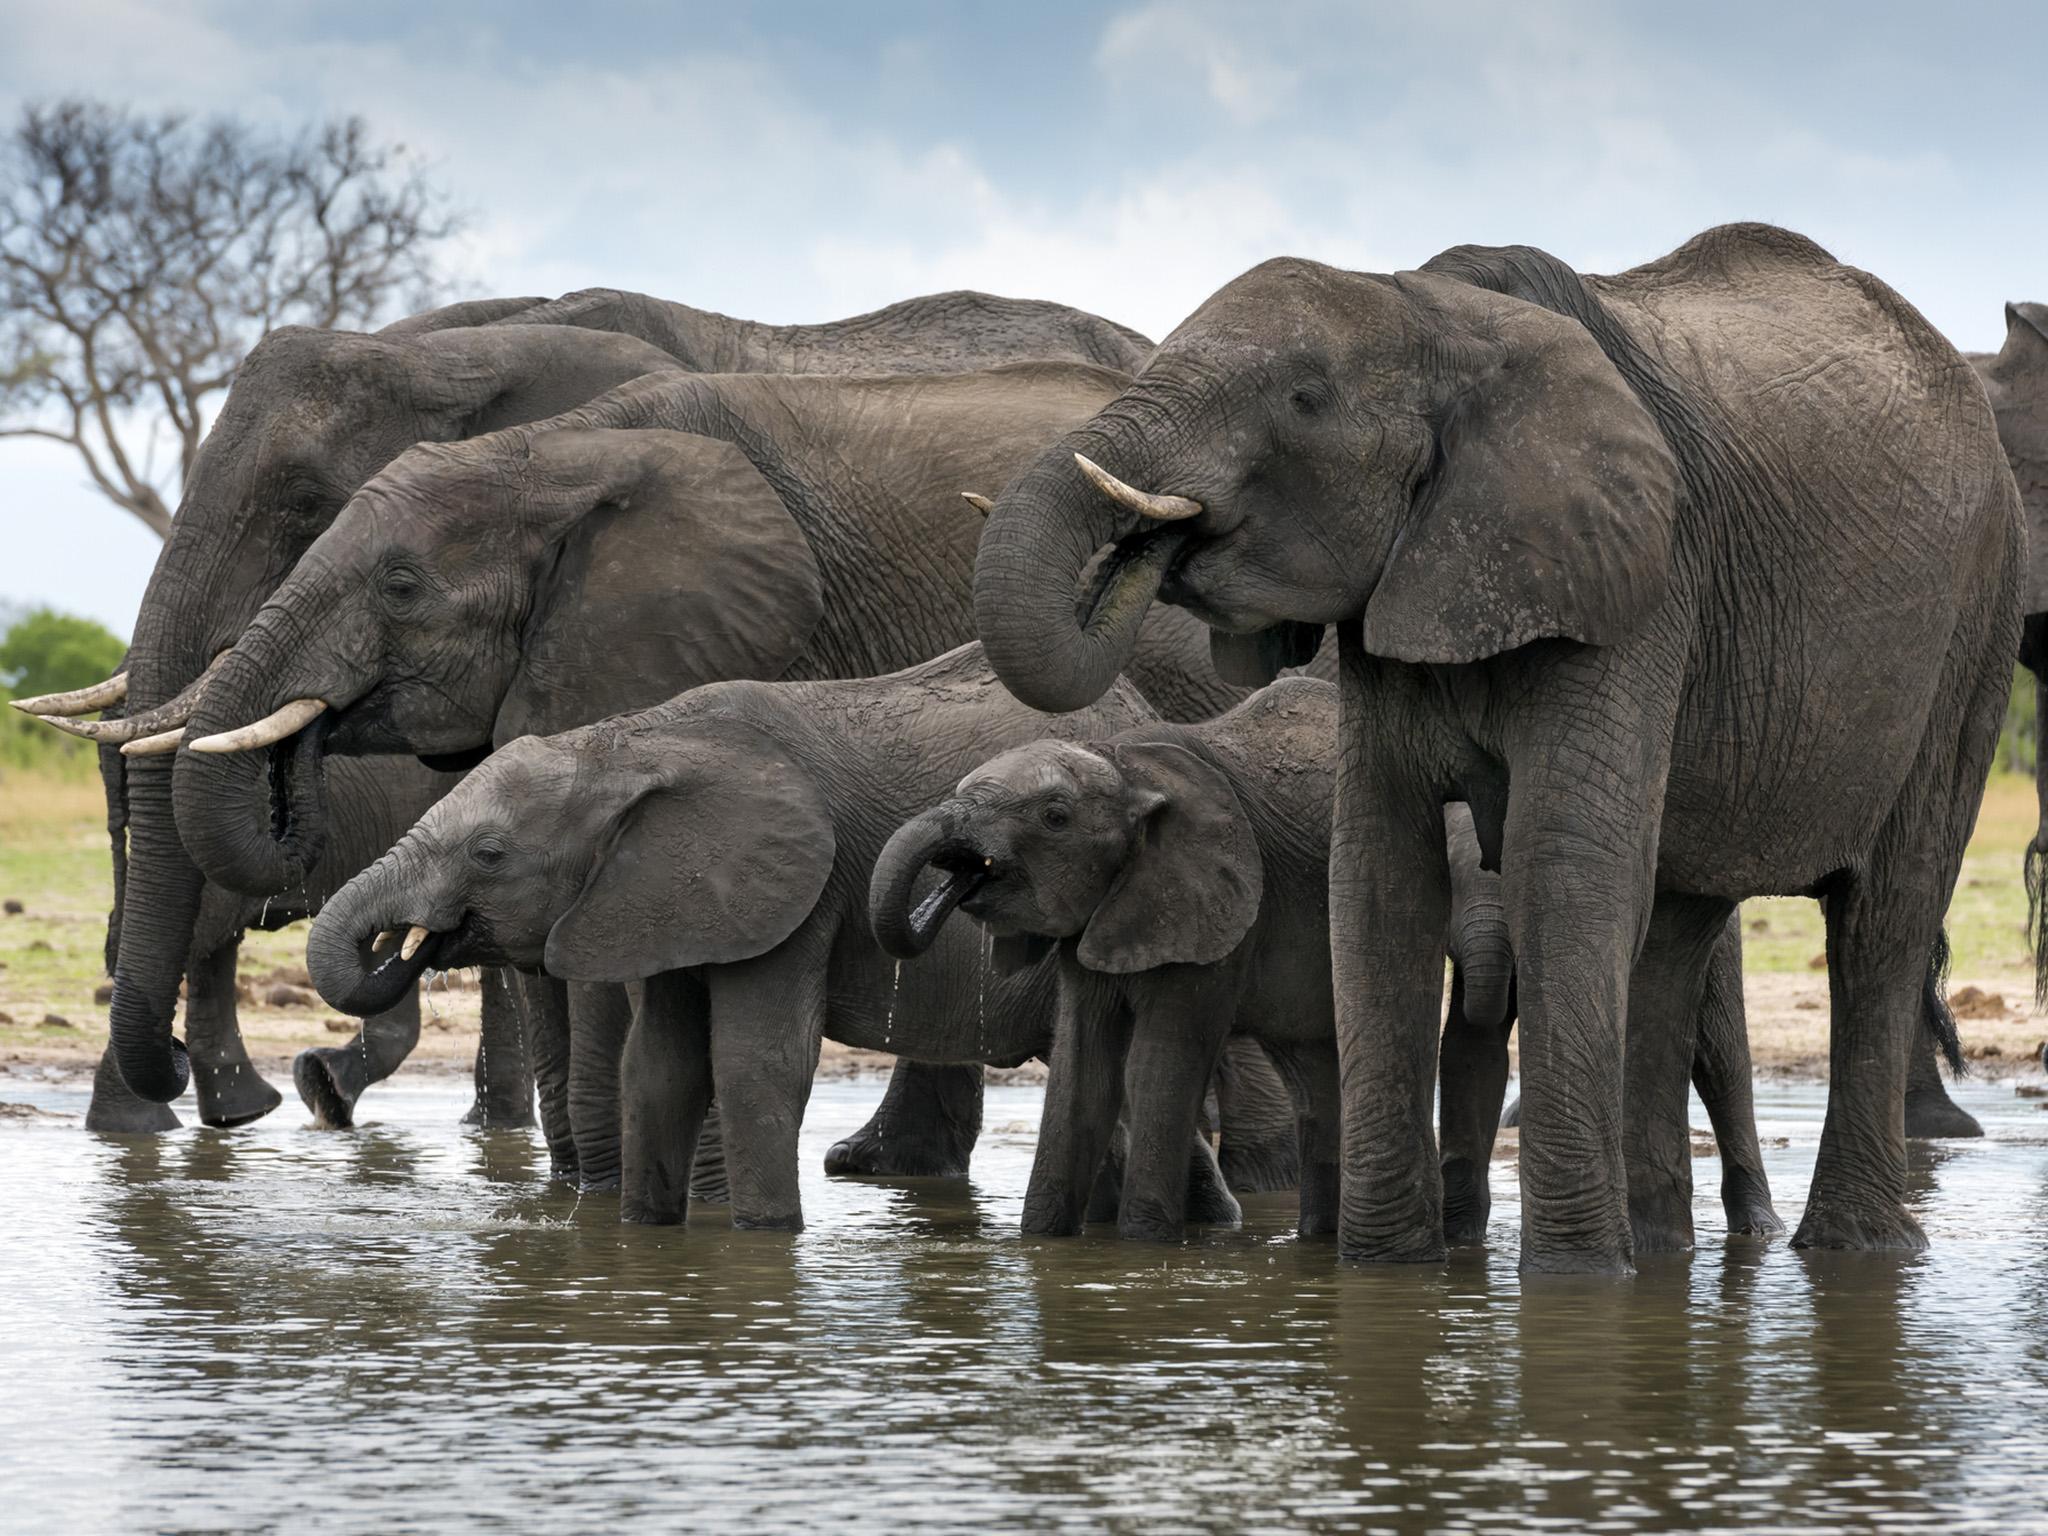 Dead elephants were discovered near Hwange National Park in Zimbabwe